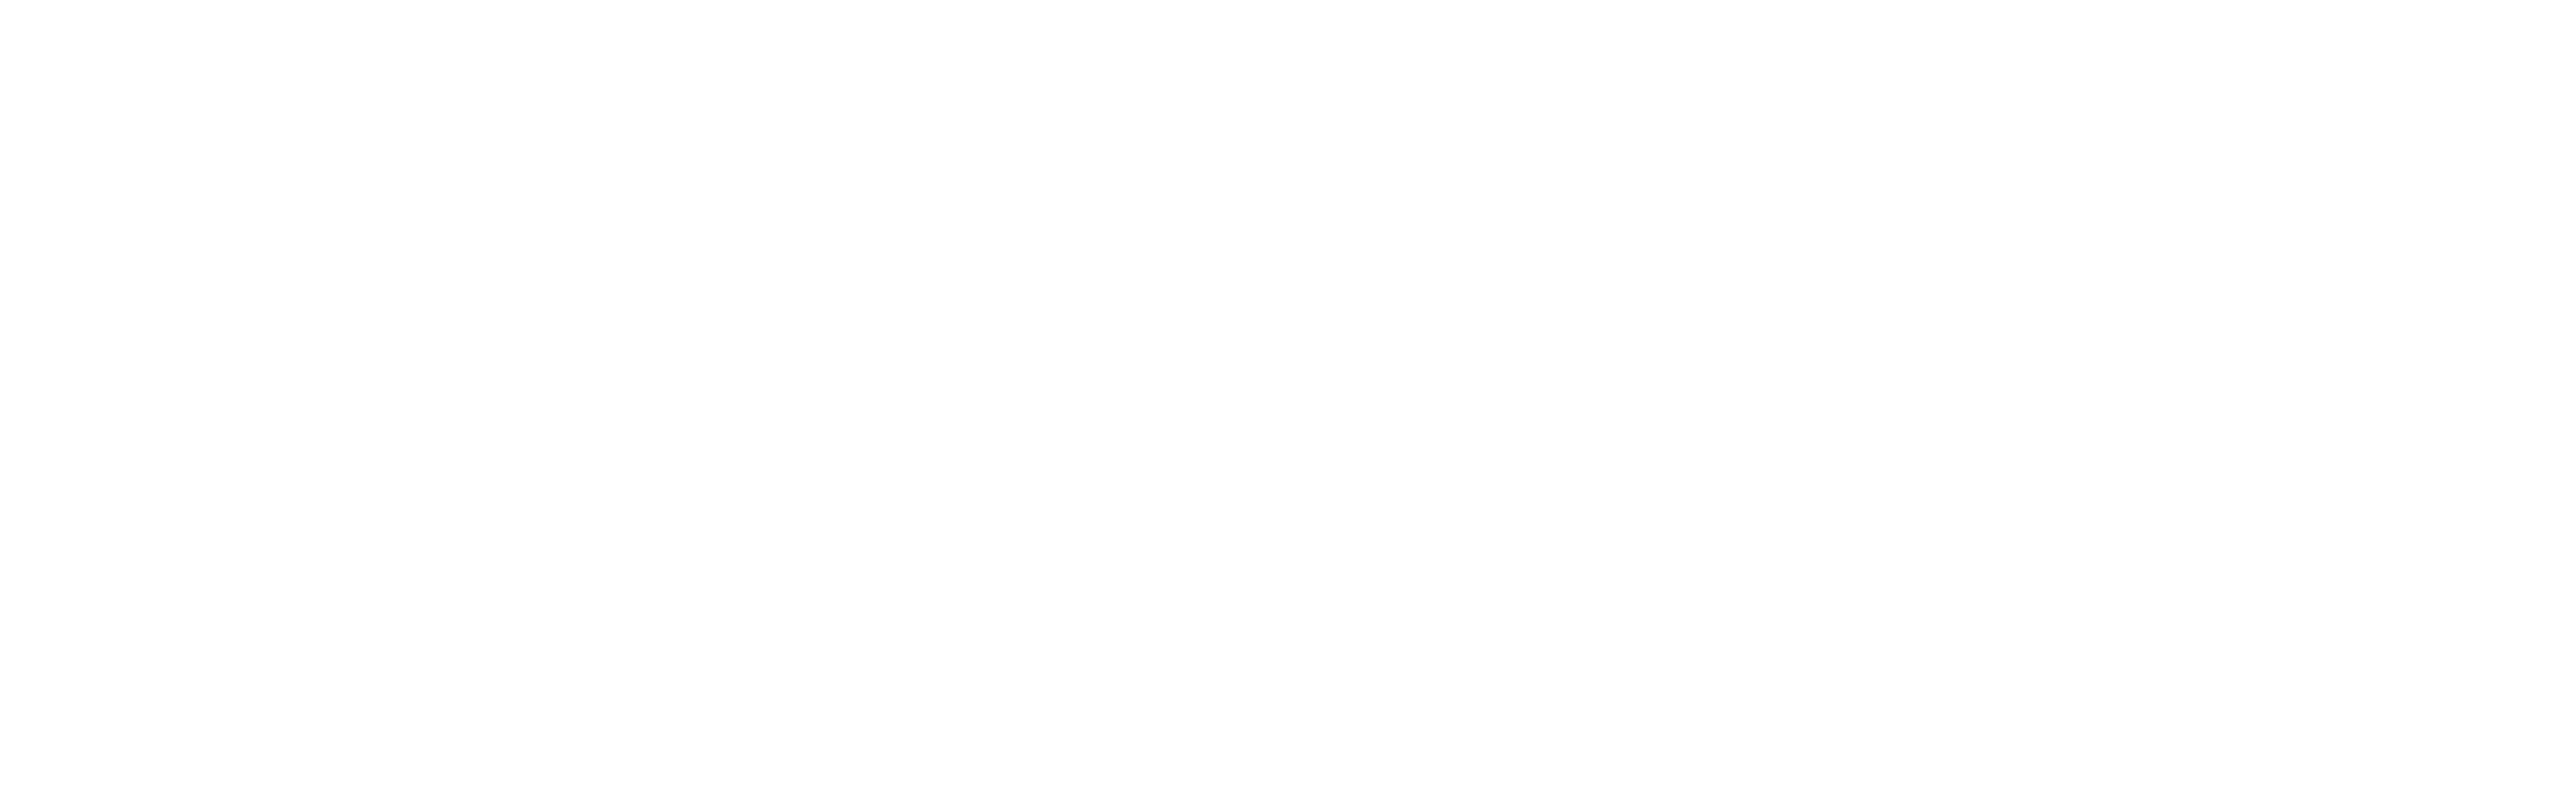 Wicker Ranch Horses Over a Century of Gray Ranch Horses